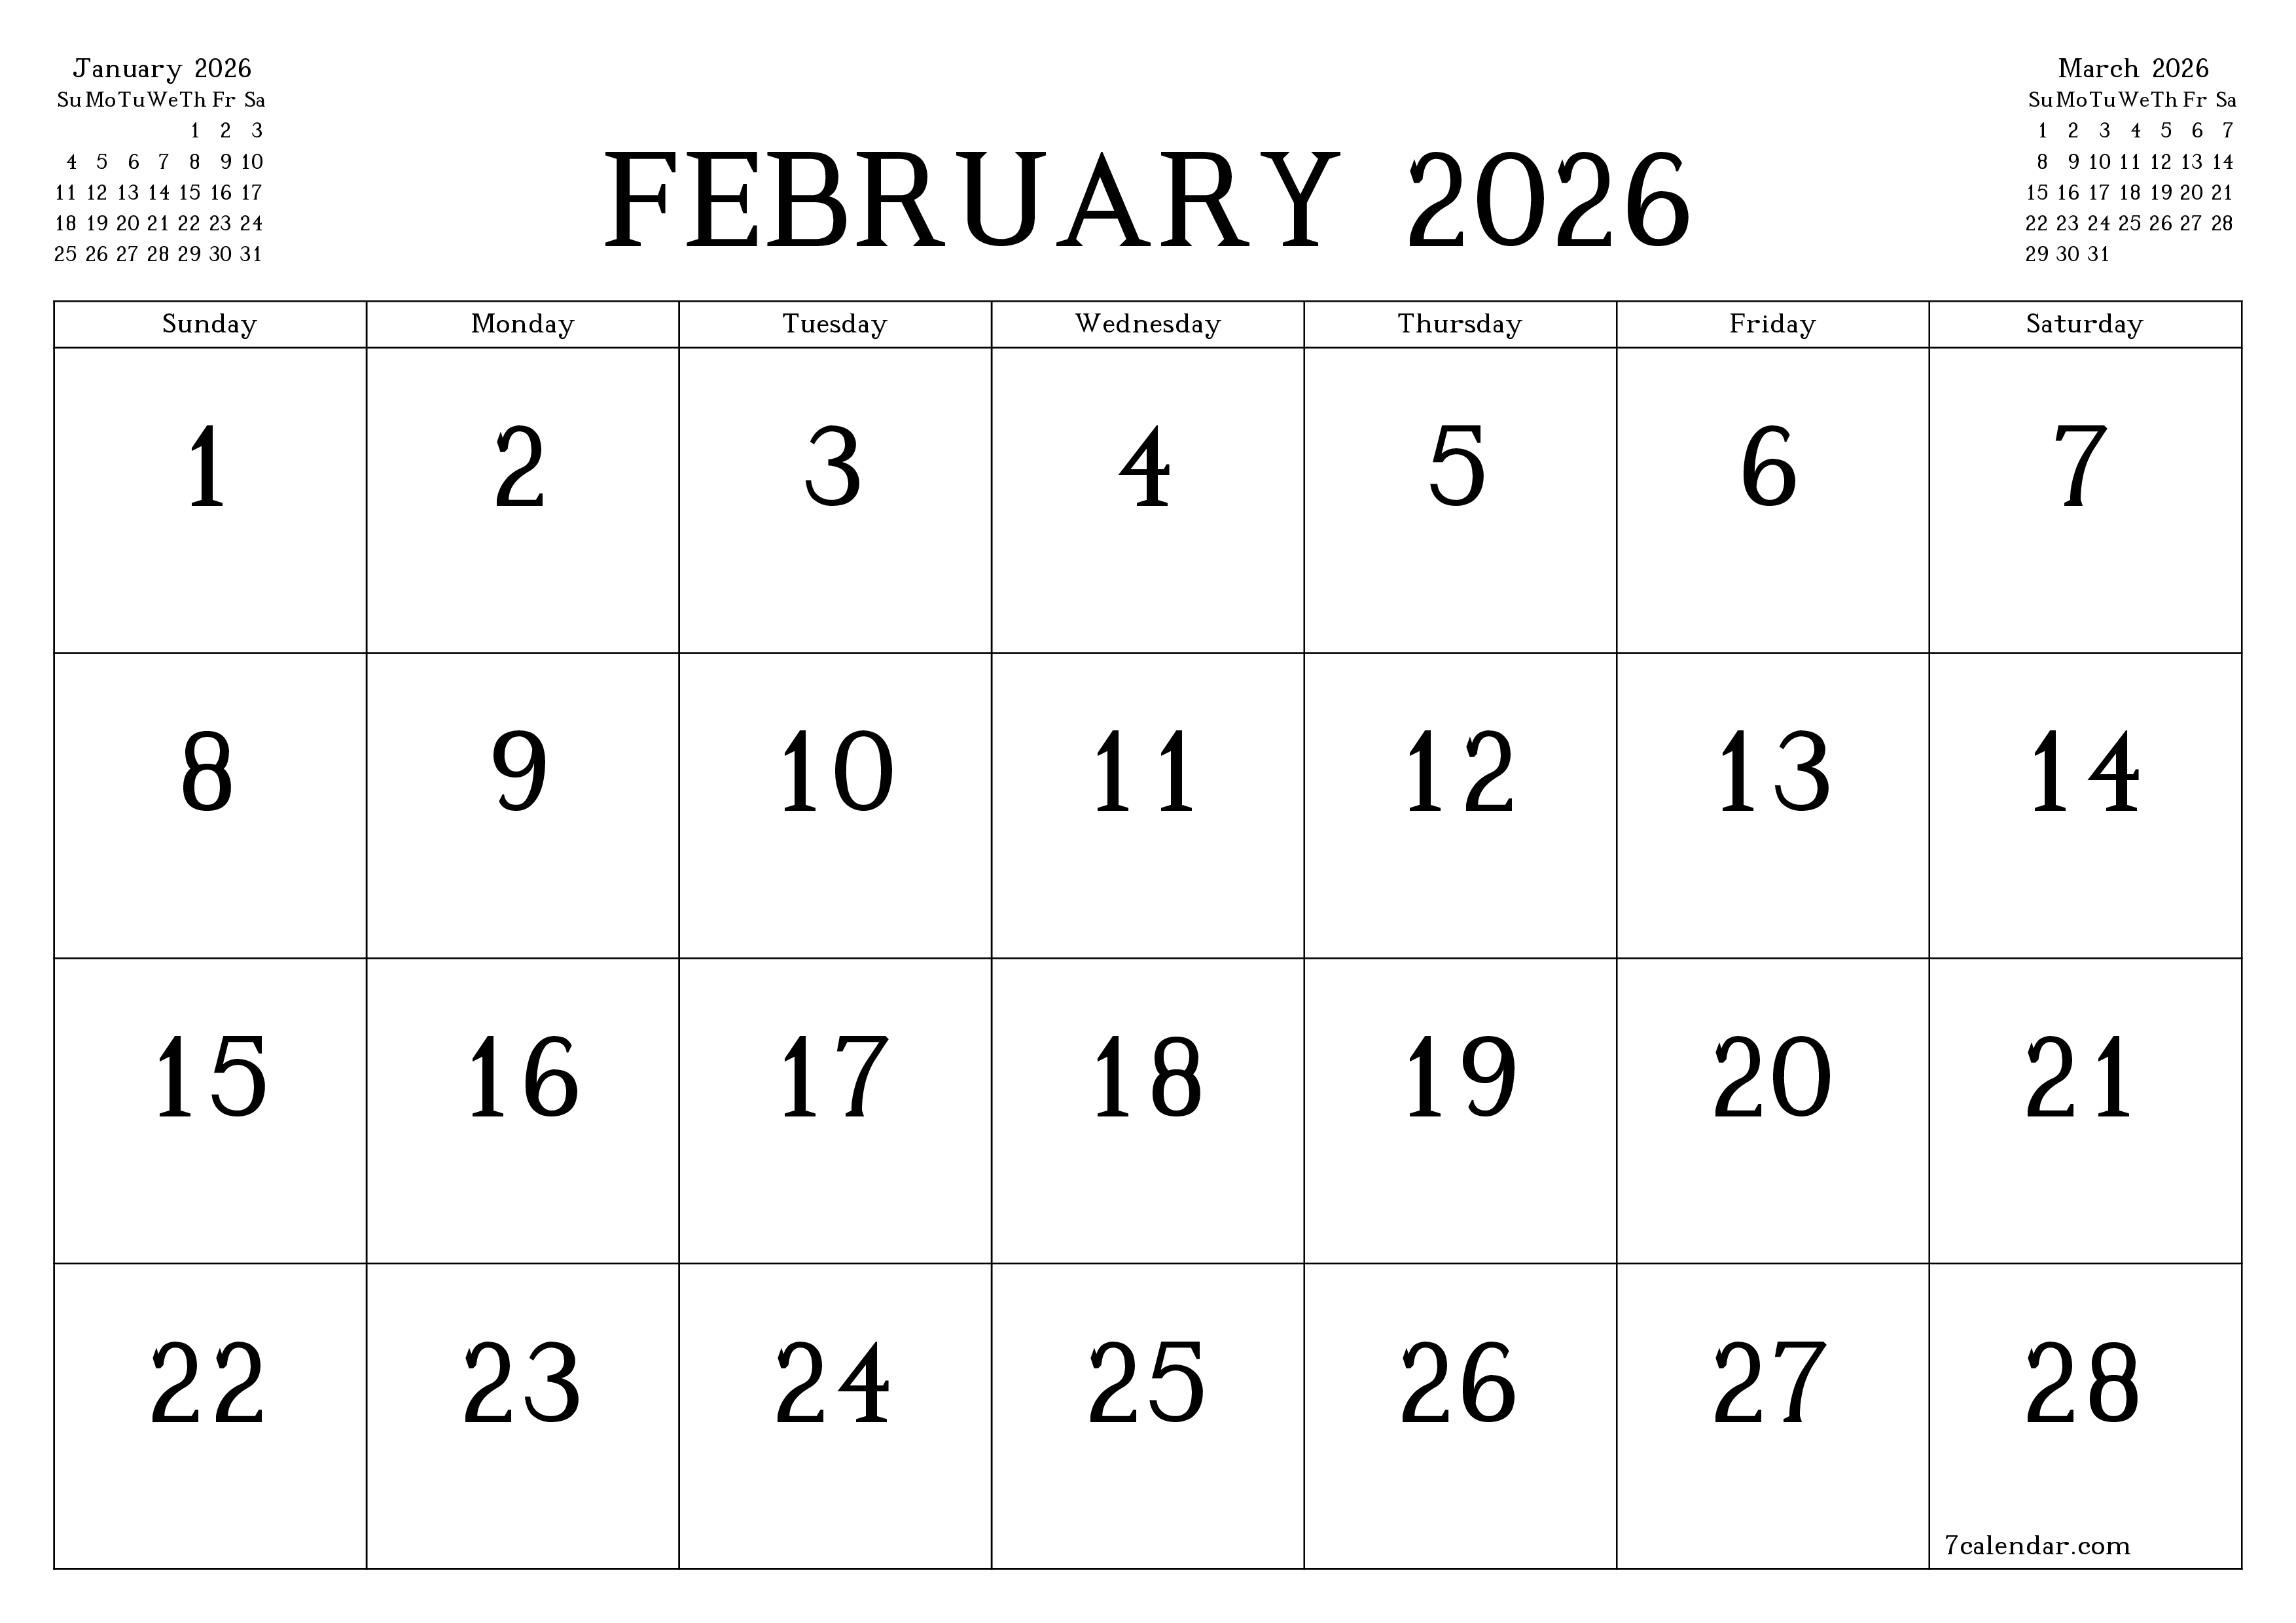 Blank calendar February 2026